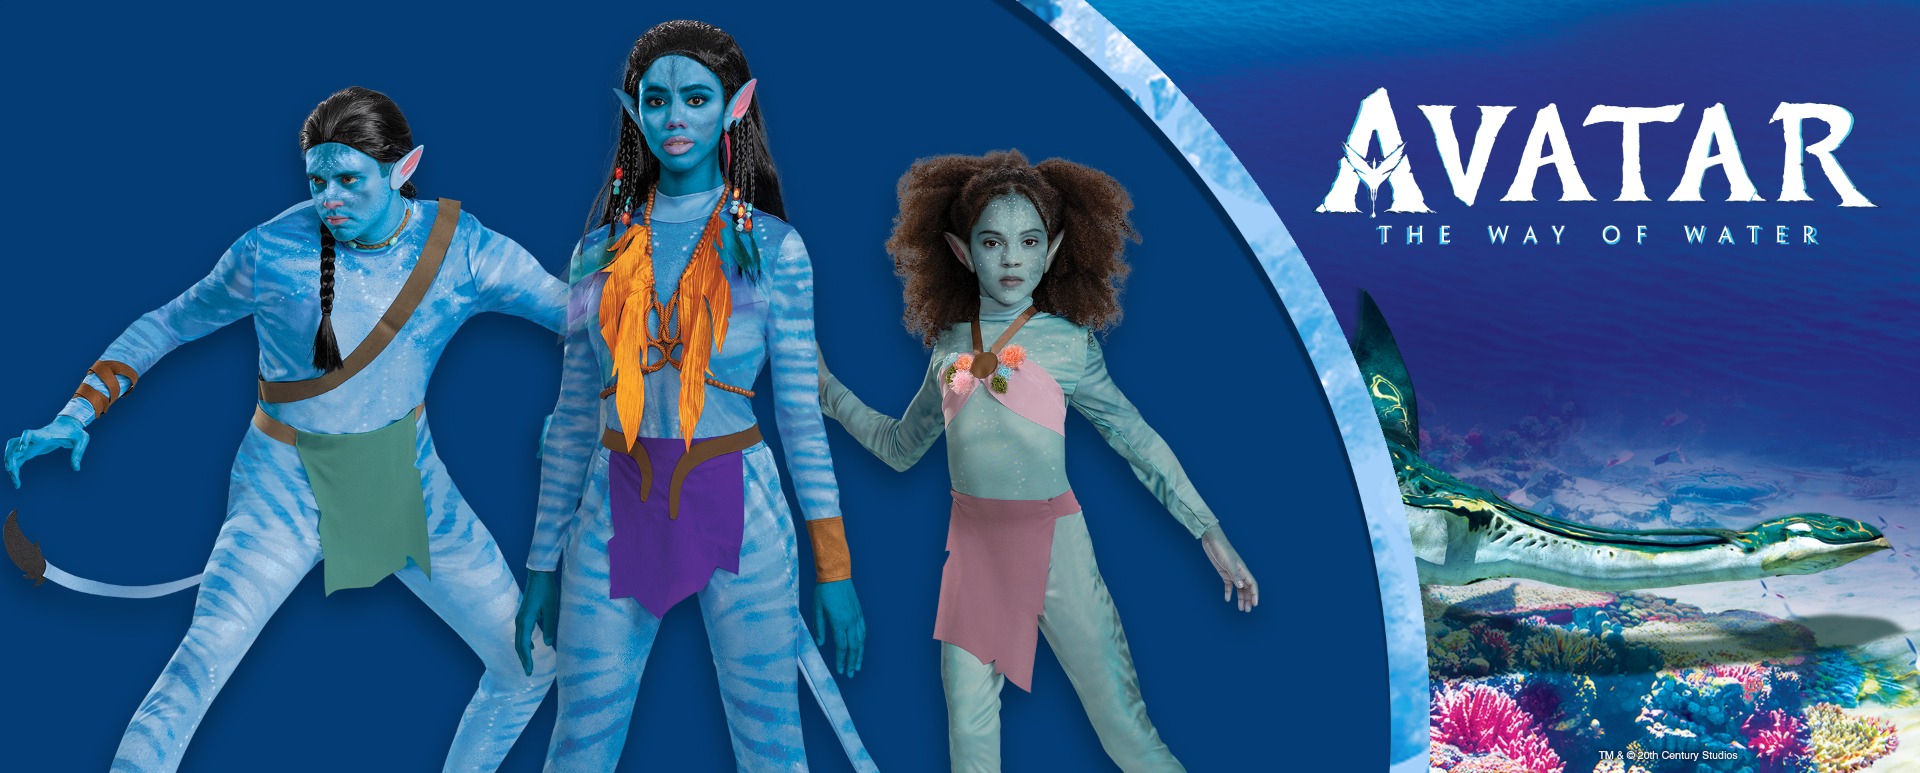 Avatar 2 Costumes